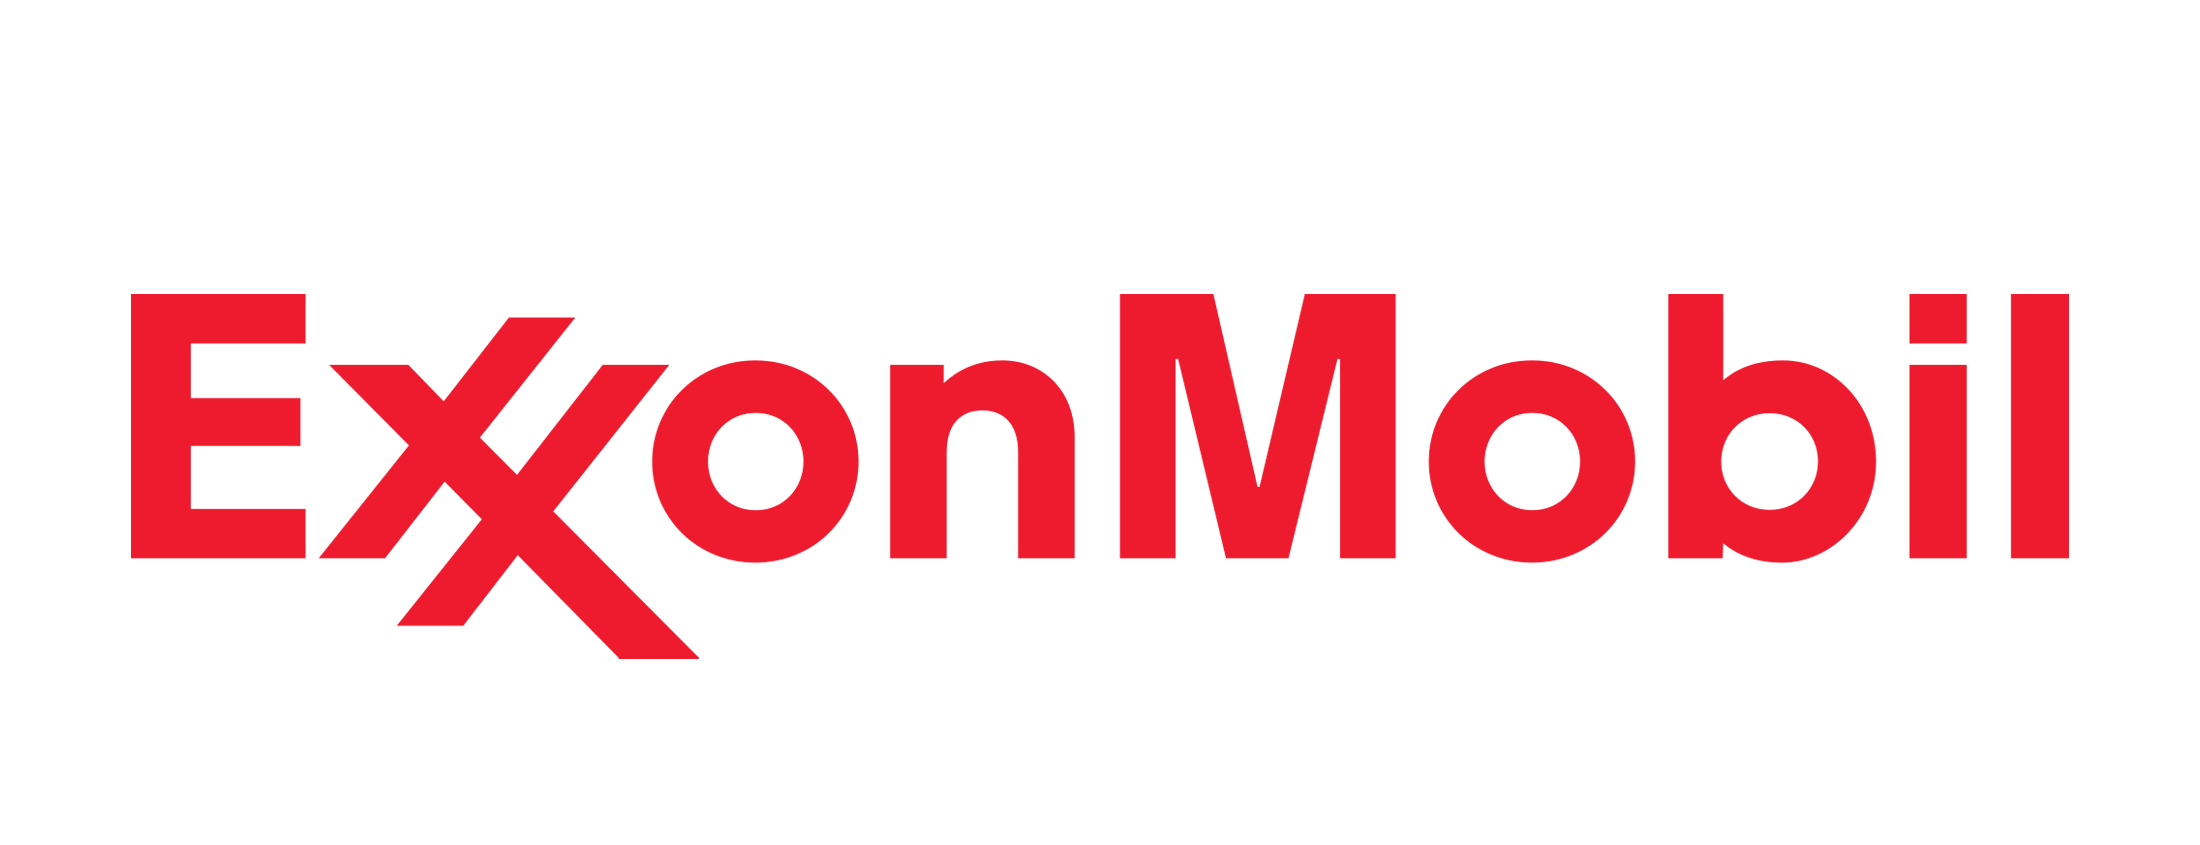 https://arkpacific.net/wp-content/uploads/2019/08/ExxonMobil-Logo.png